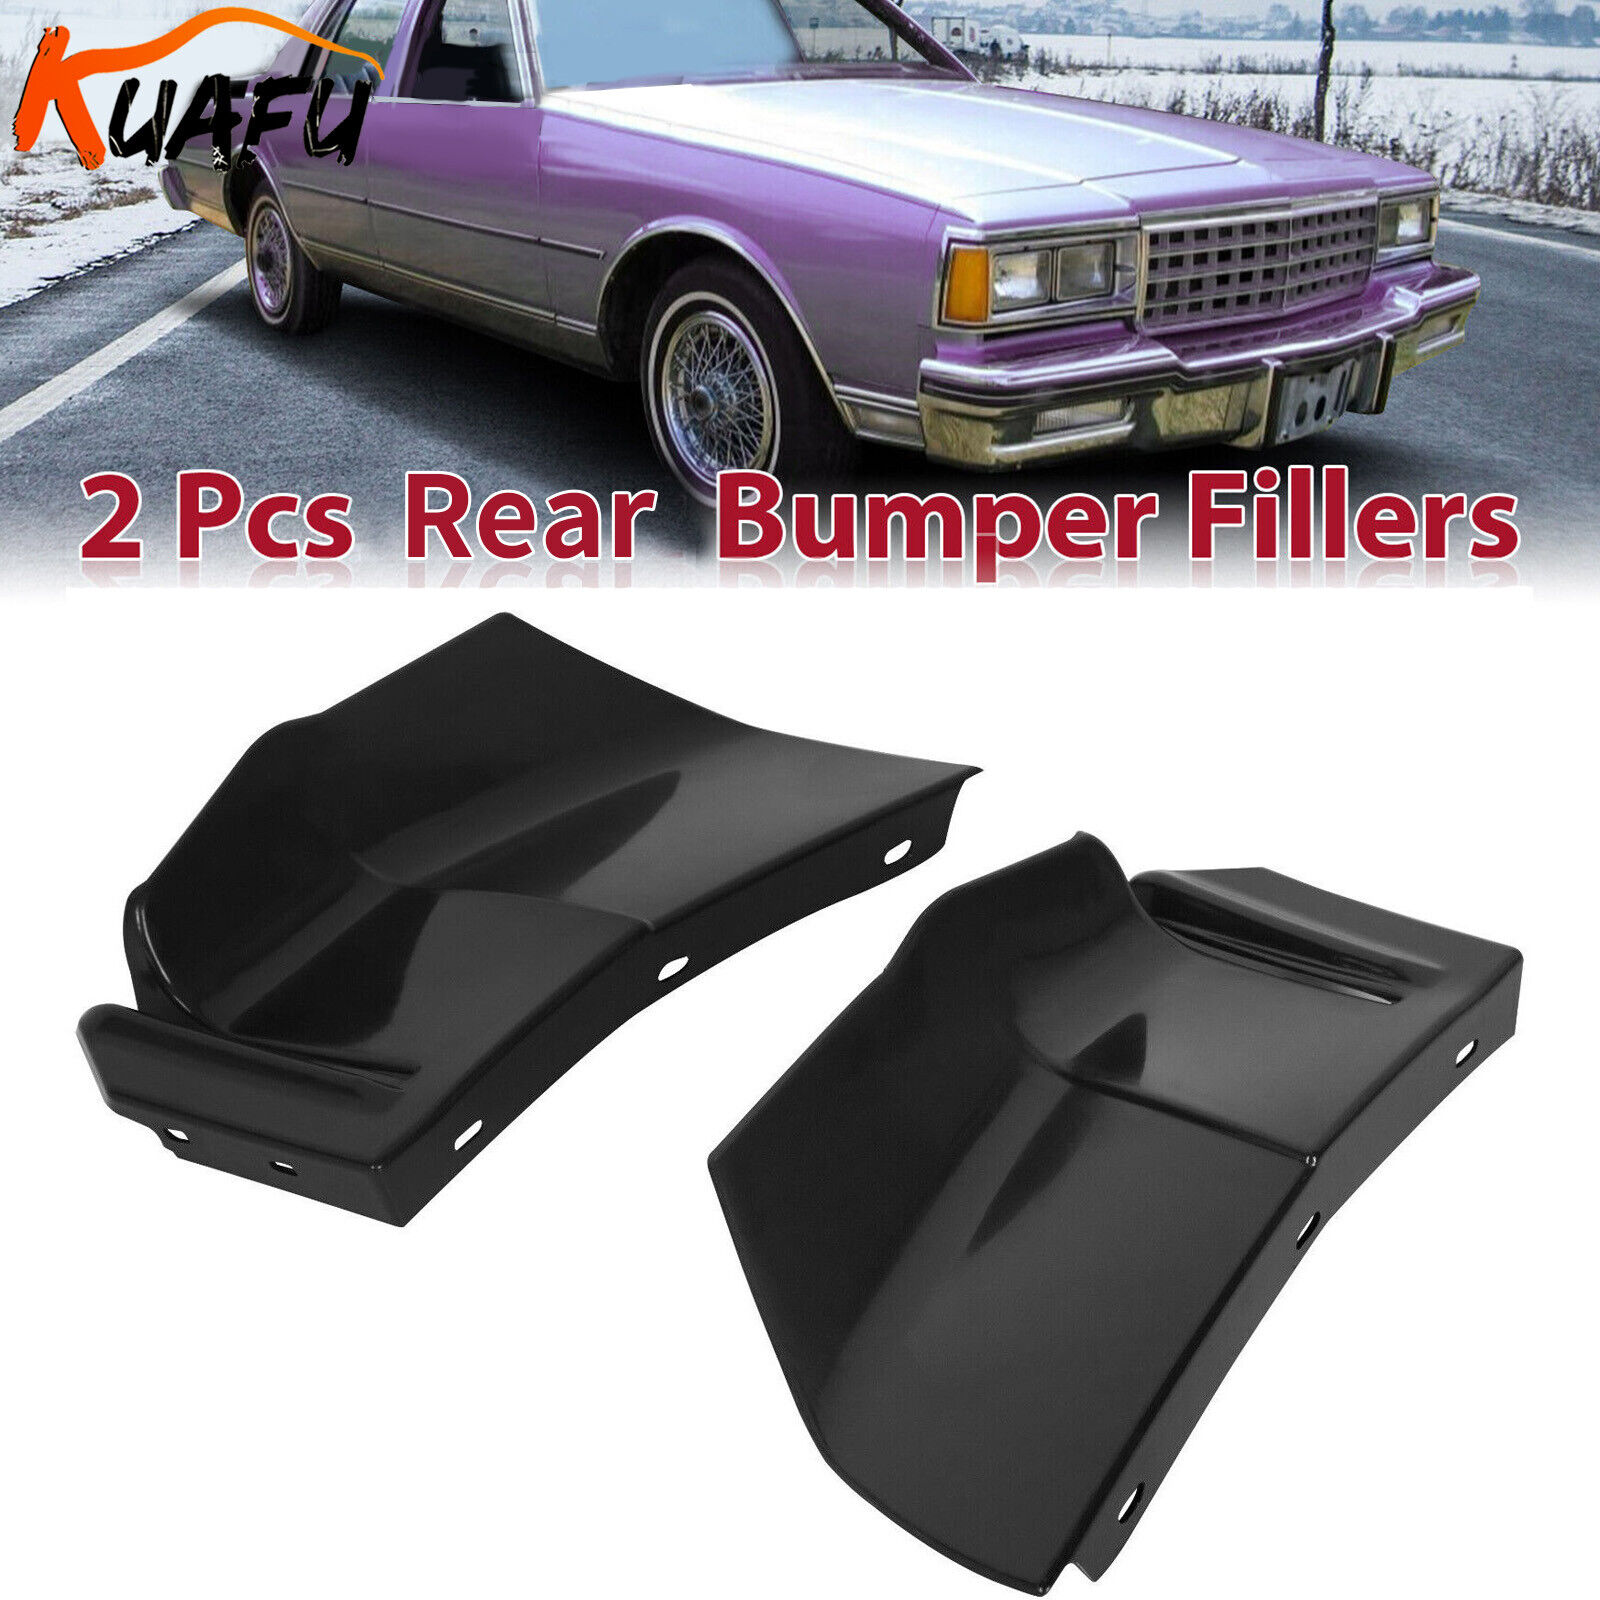 Fits For 1980 1981 1982-1985 Chevrolet Caprice Impala Bumper Fillers Rear Filler